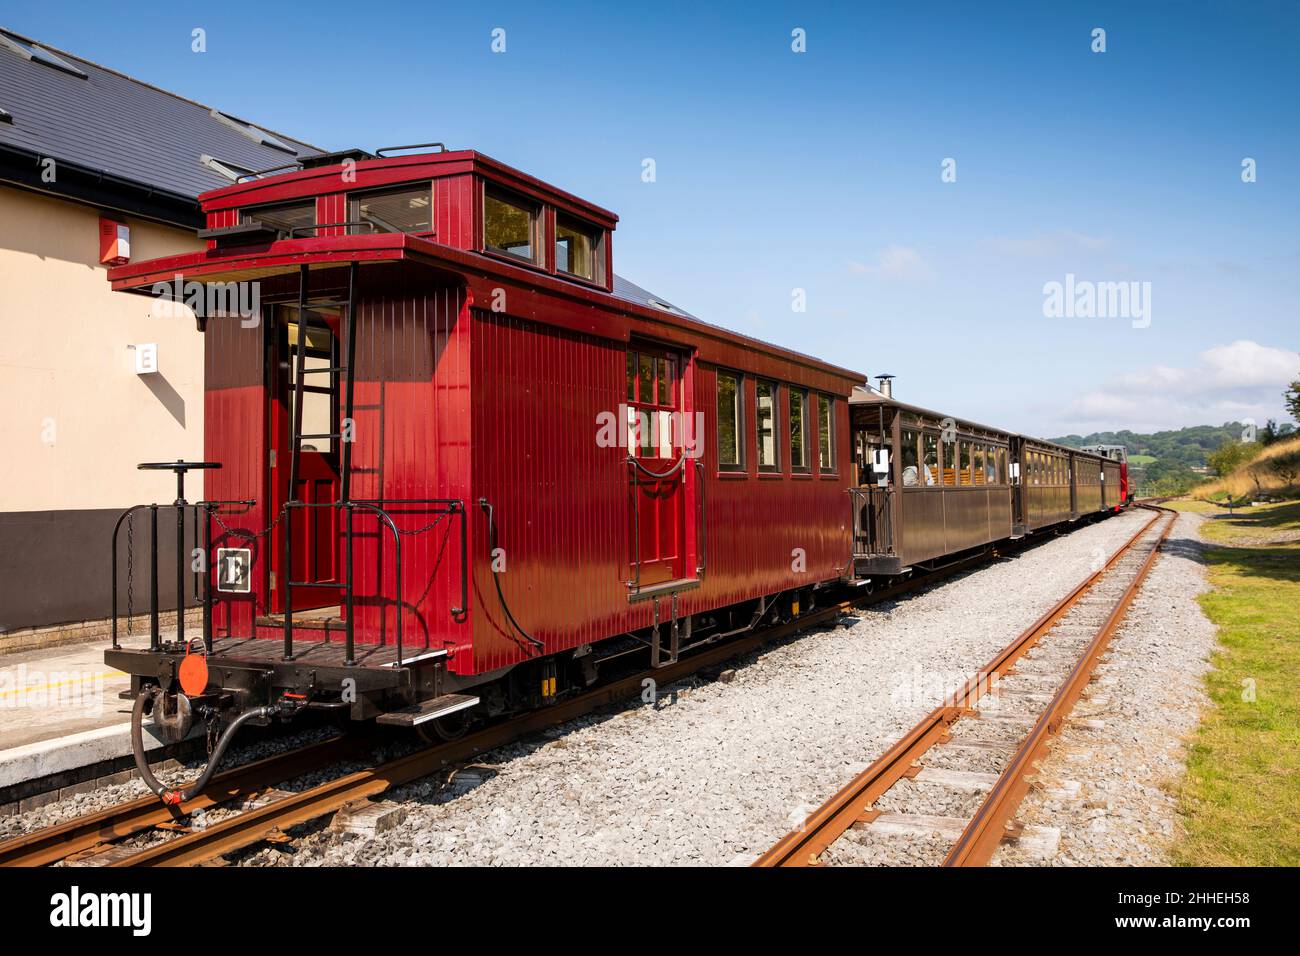 UK, Wales, Merthyr Tydfil, Pant, Brecon Mountain Railway, train at station platform Stock Photo